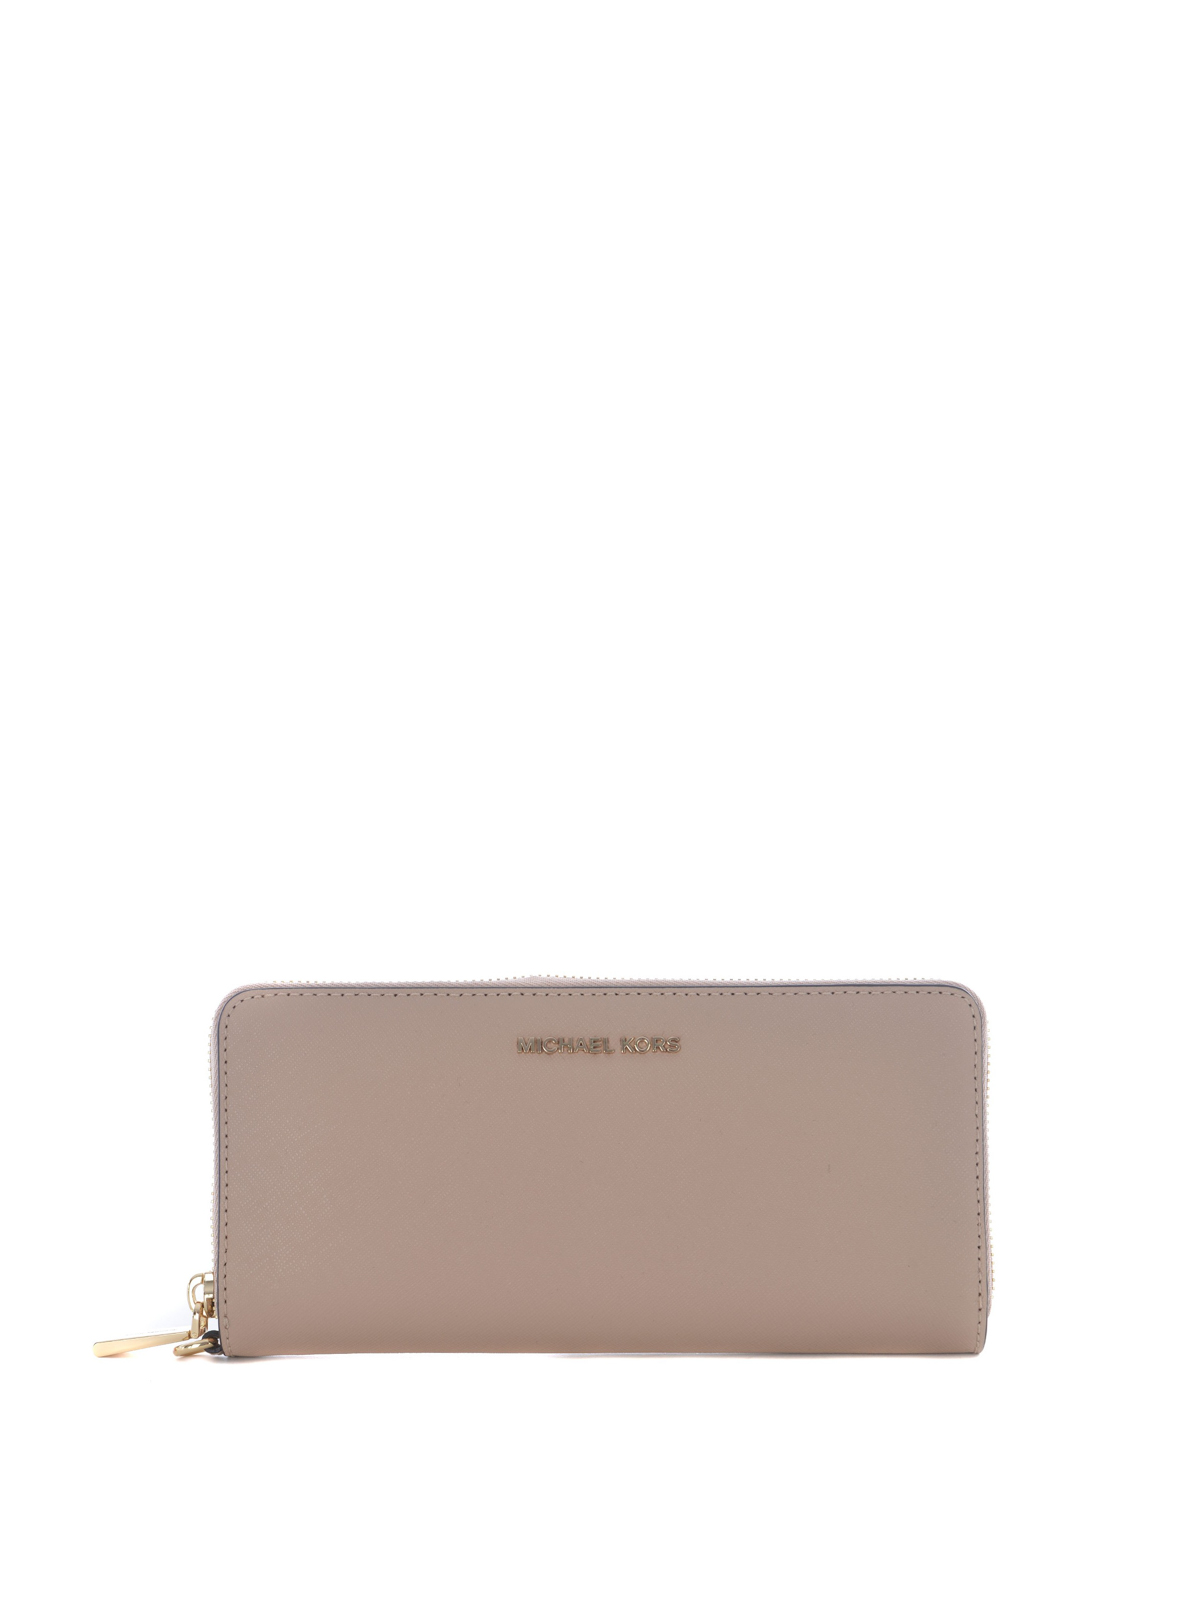 Guaranteed Original Michael Kors Jetset Womens Double Zip Plain Wristlet  Wallet  Pink  Lazada PH